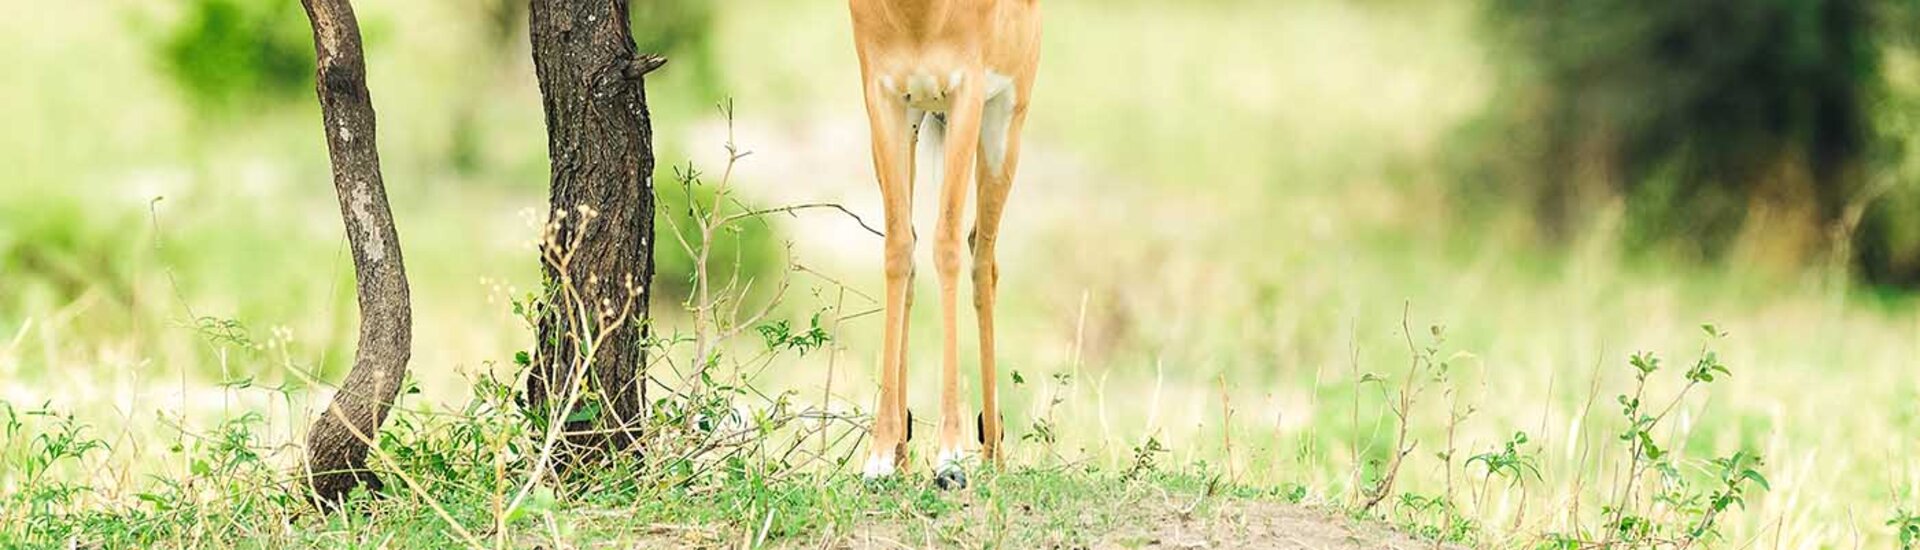 Impala im Tarangire Nationalpark in Tansania